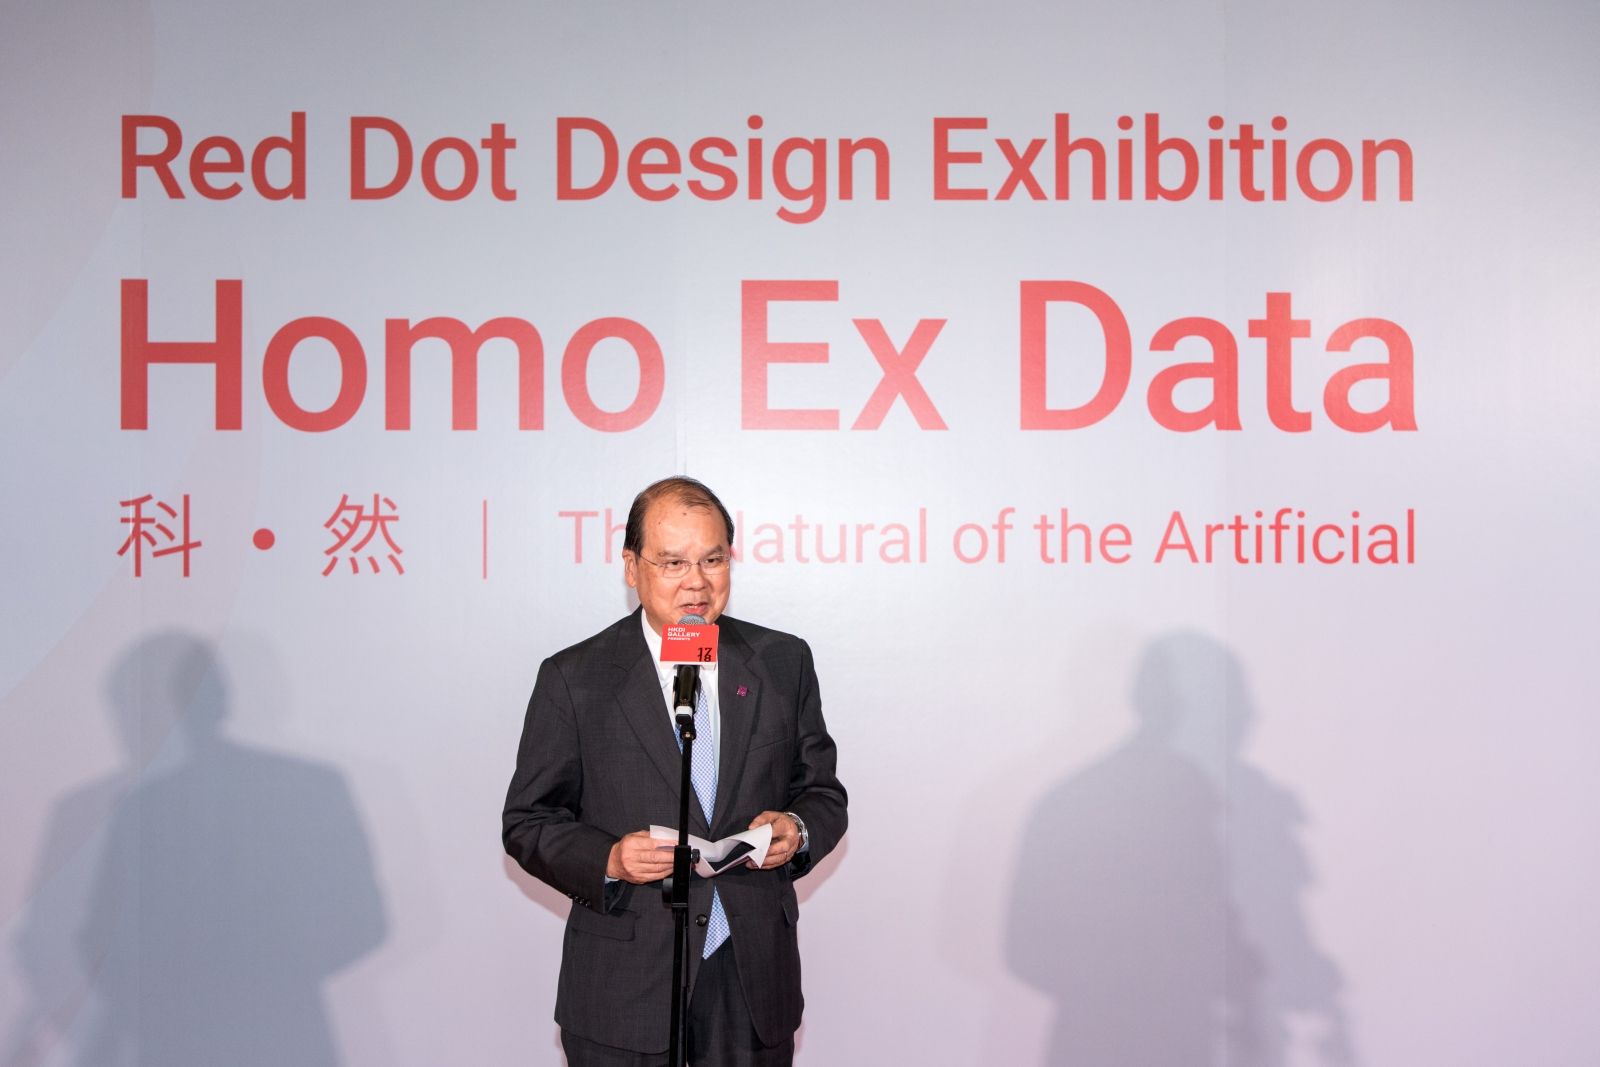 HKDI Gallery Presents红点设计《科 • 然》主题展览
【Homo Ex Data － The Natural of the Artificial】
 迈向未来数码时代的科技创新与影响